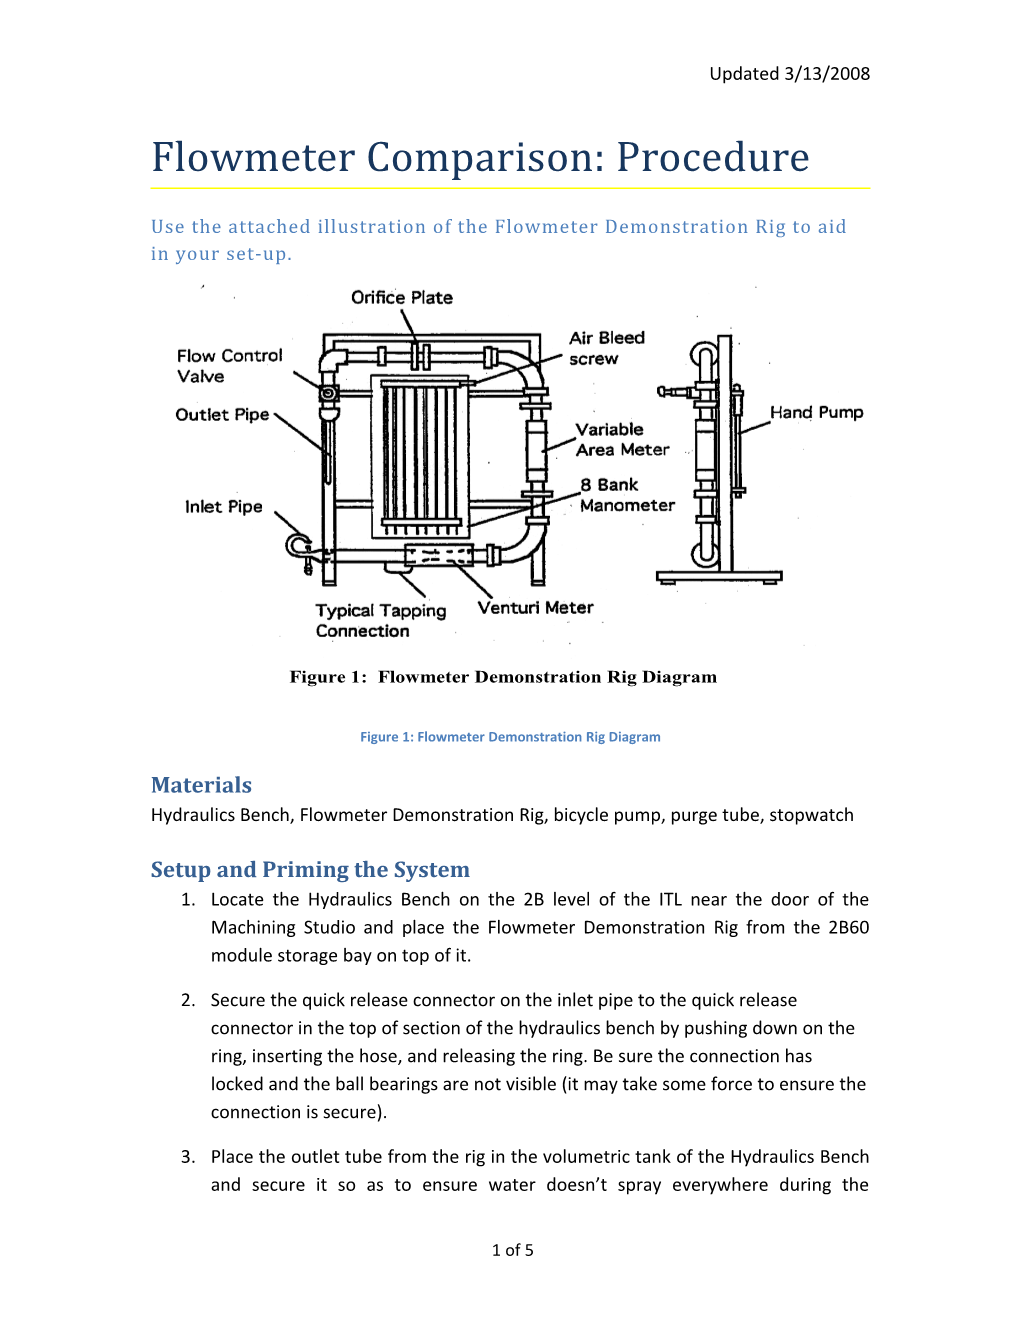 Performance Evaluation of Three Different Flowmeters